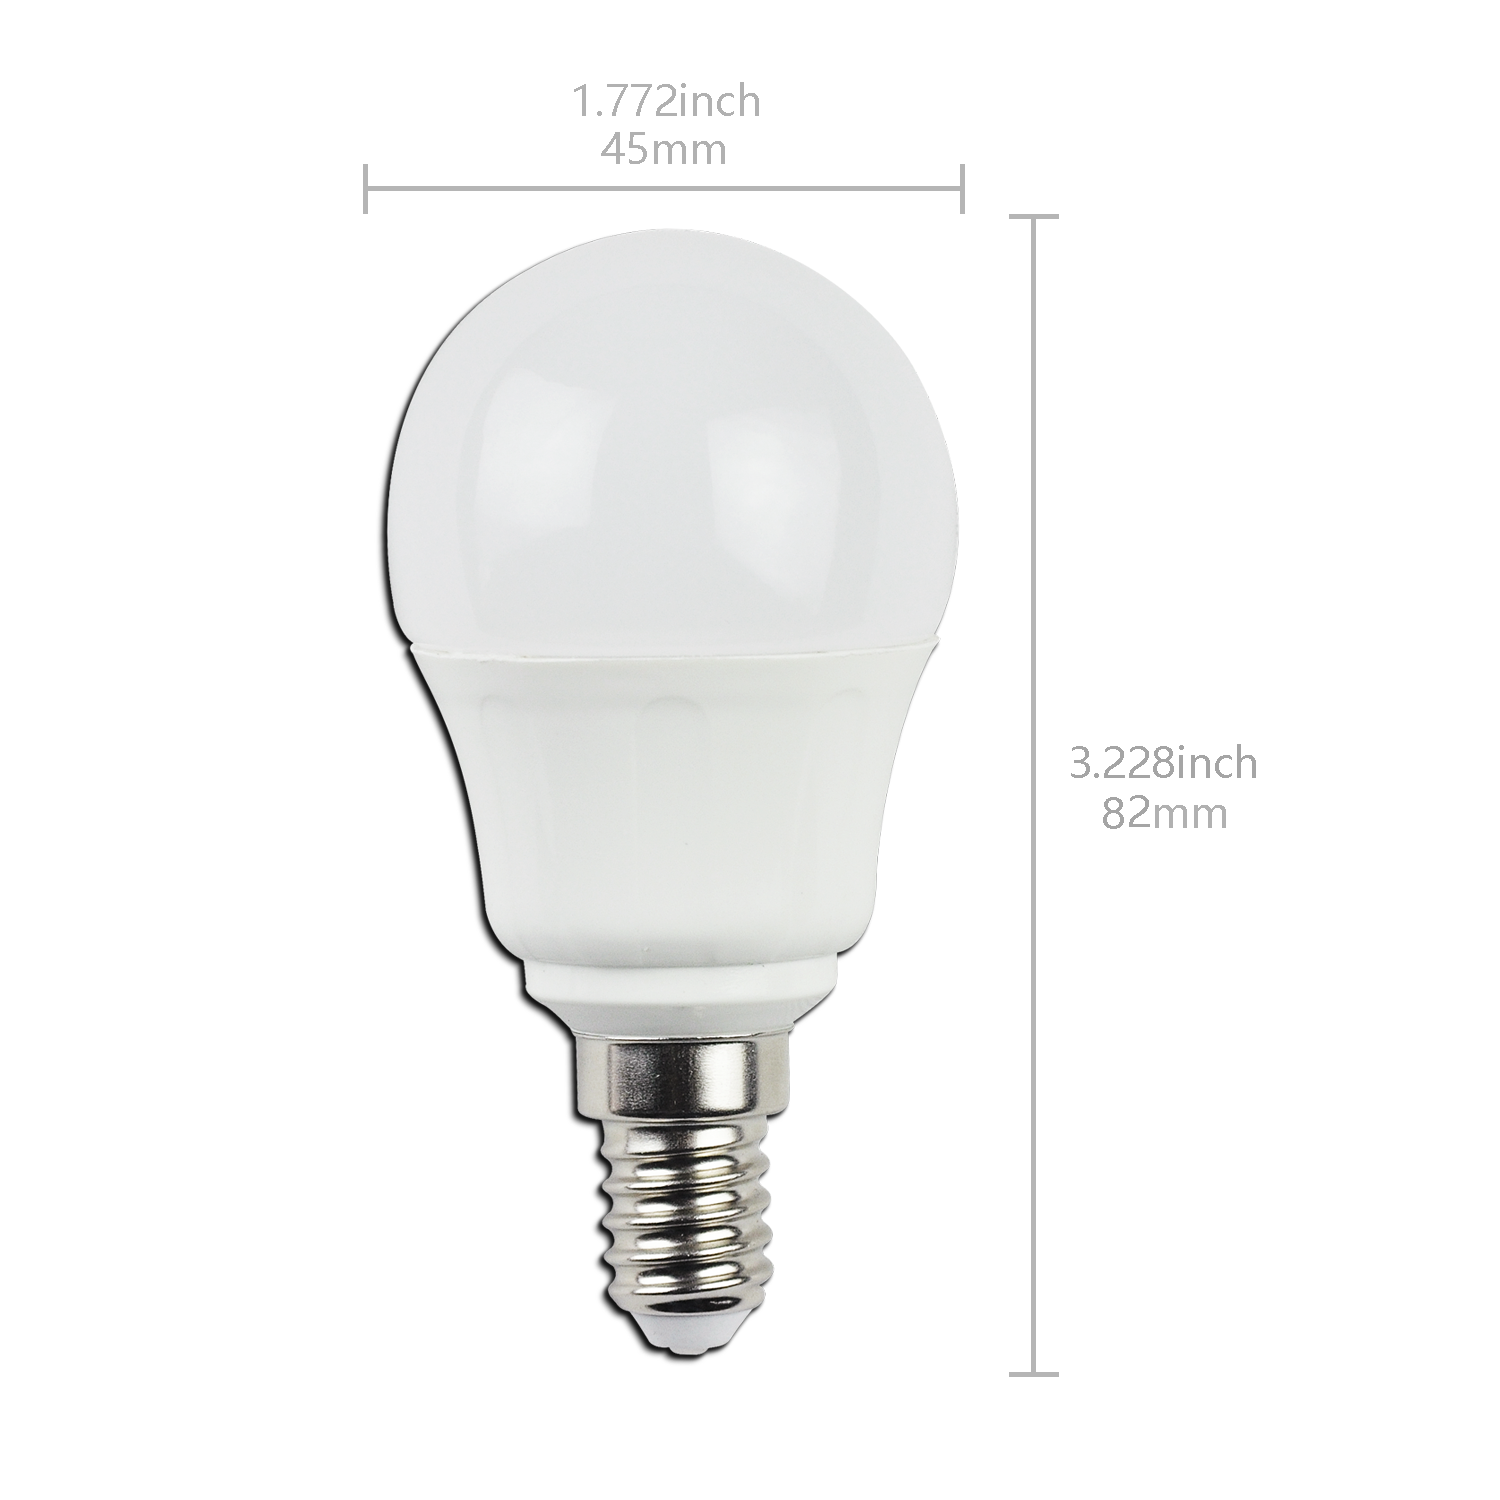 Aigostar - Confezione da 10 Lampadine LED A5 G45B, 7W, E14, 470 lumen, Luce Calda 3000K [Classe di efficienza energetica A+]